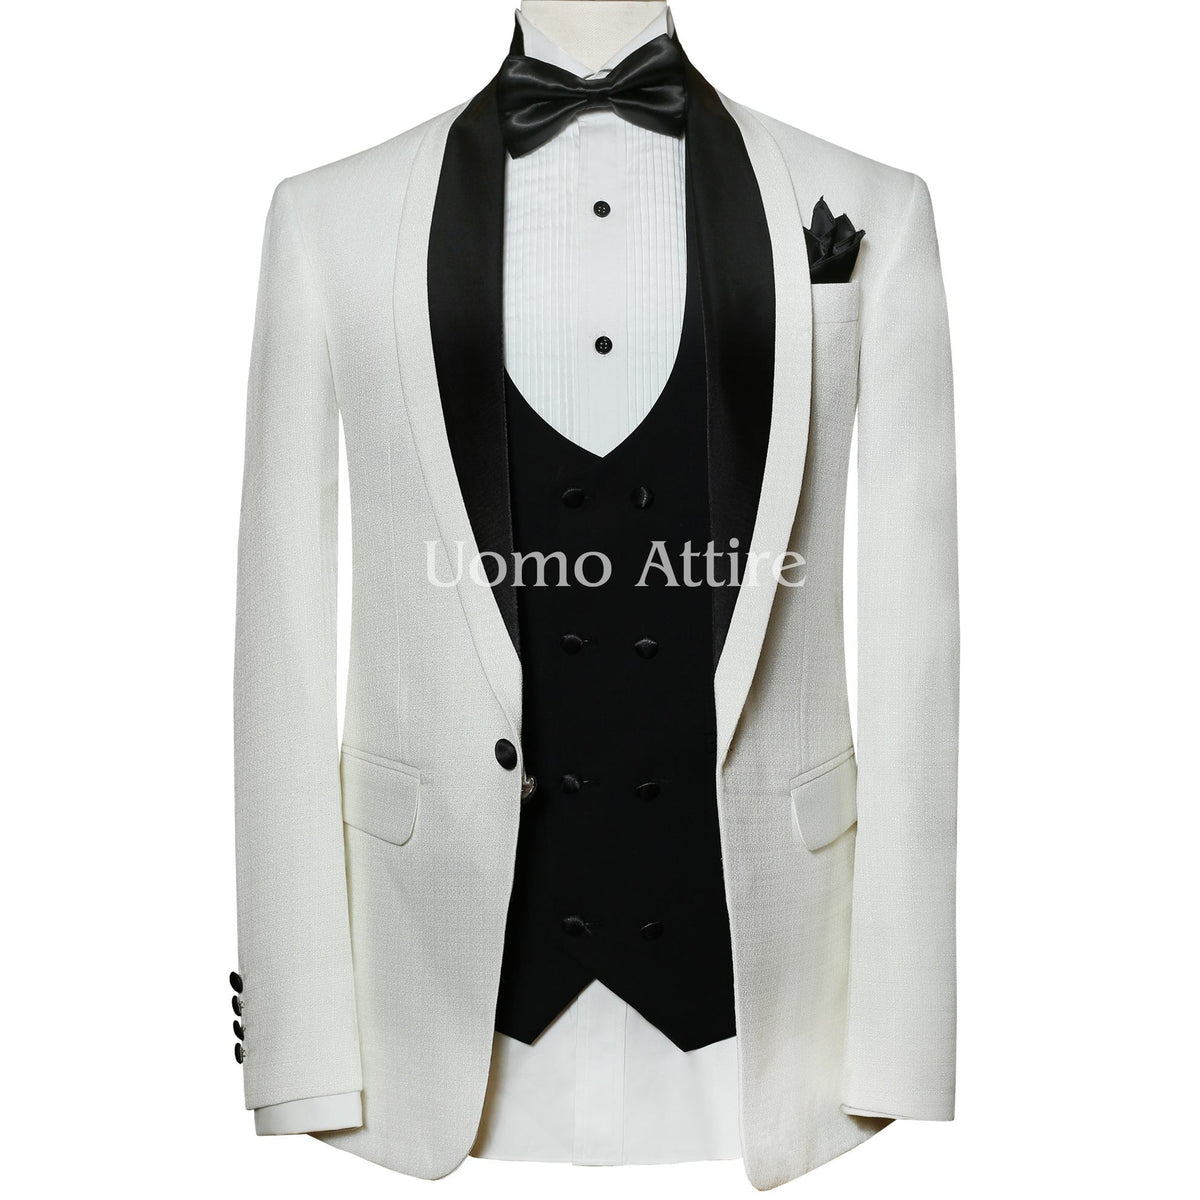 Handmade white and black contrast tuxedo 3 piece suit – Uomo Attire